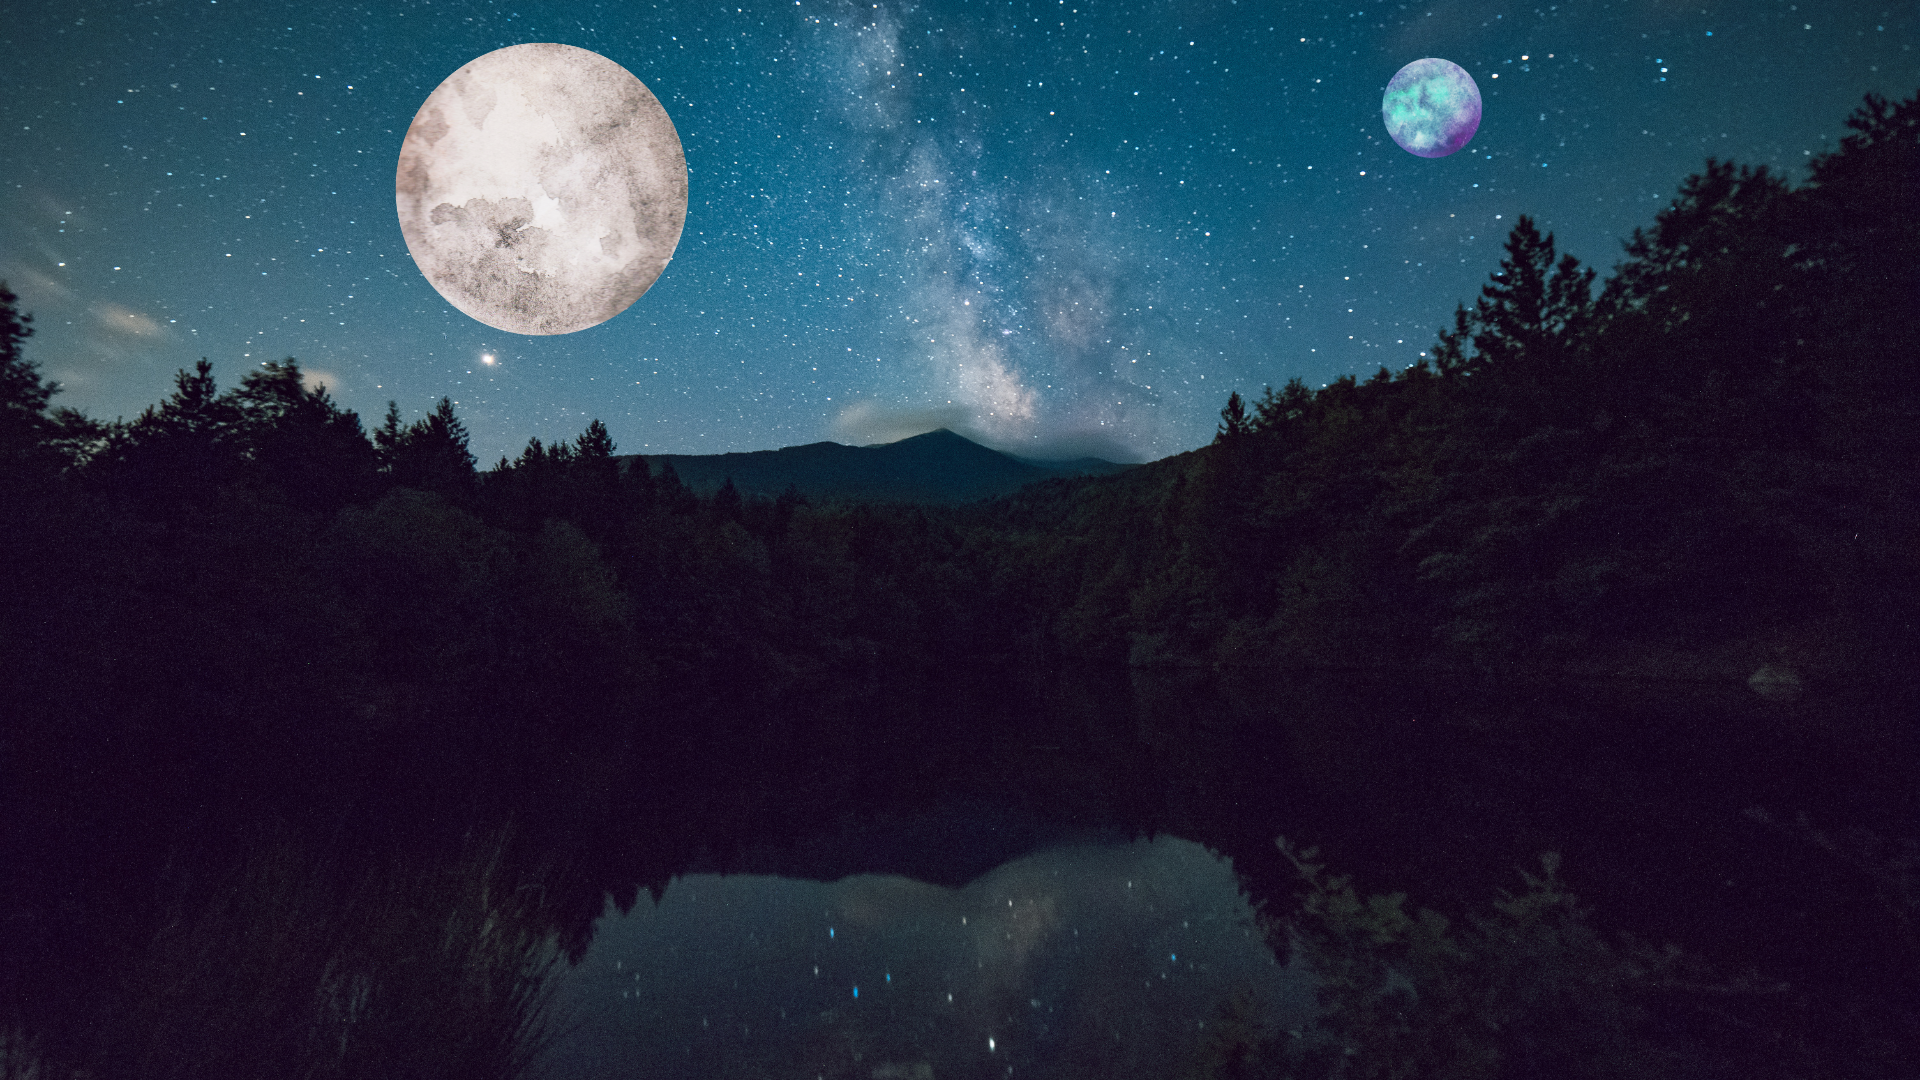 Beautiful Flower Night Mountain Moon Scenery Art 4K Wallpaper iPhone HD  Phone #6071k